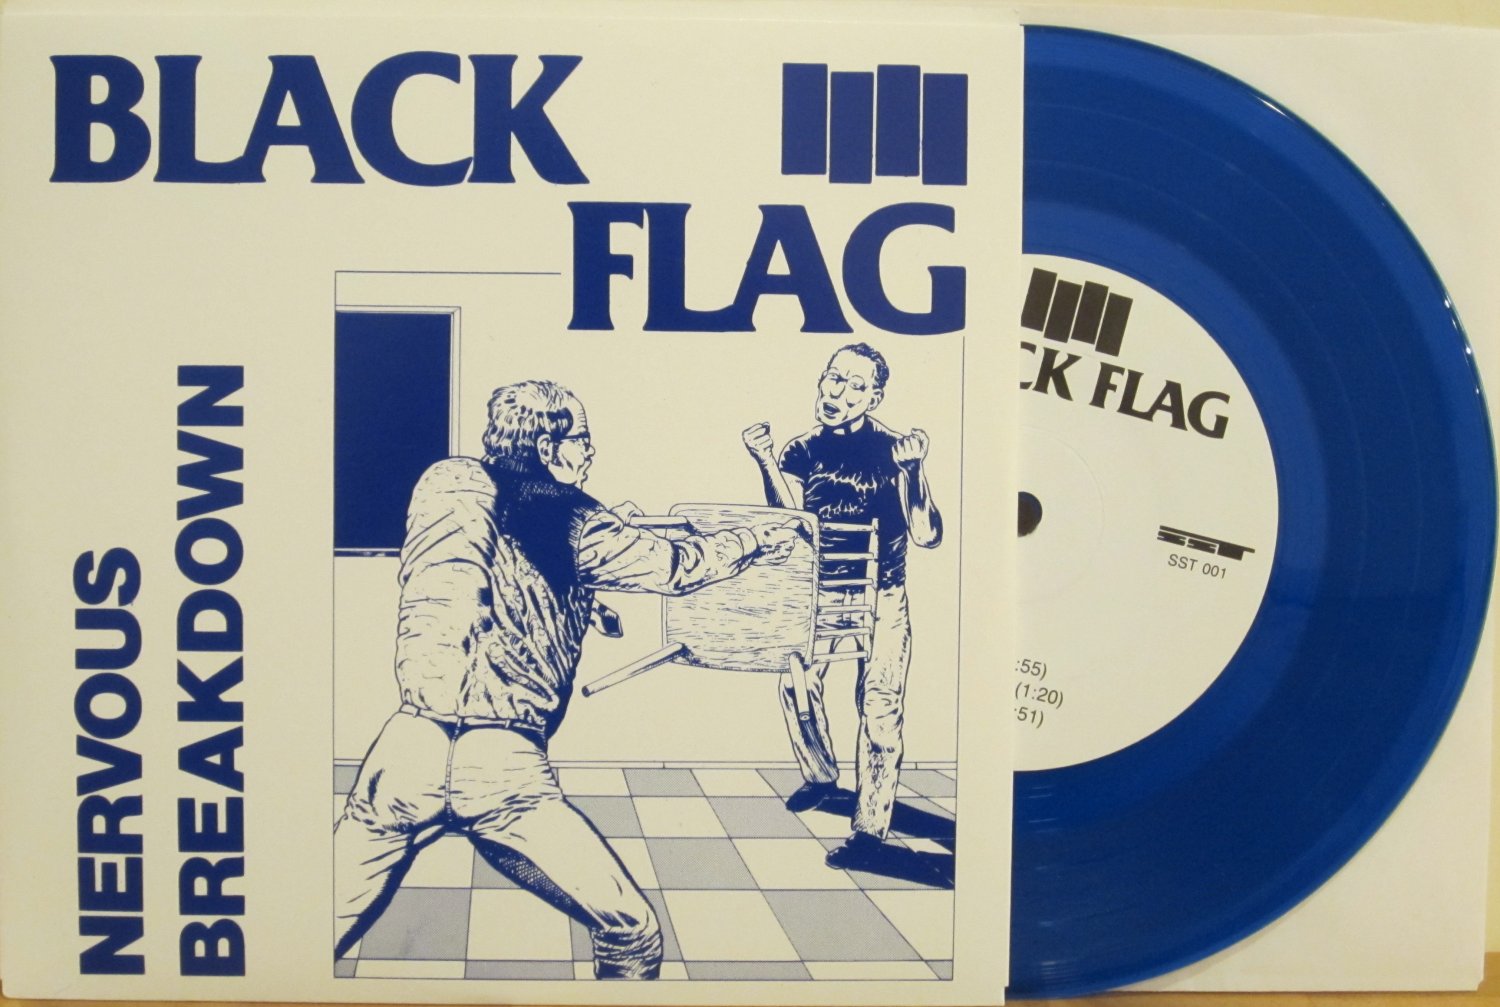 Black flag деньги. Black Flag группа. Black Flag album Covers. Black Flag Damaged. Black Flag Band Vinyl.